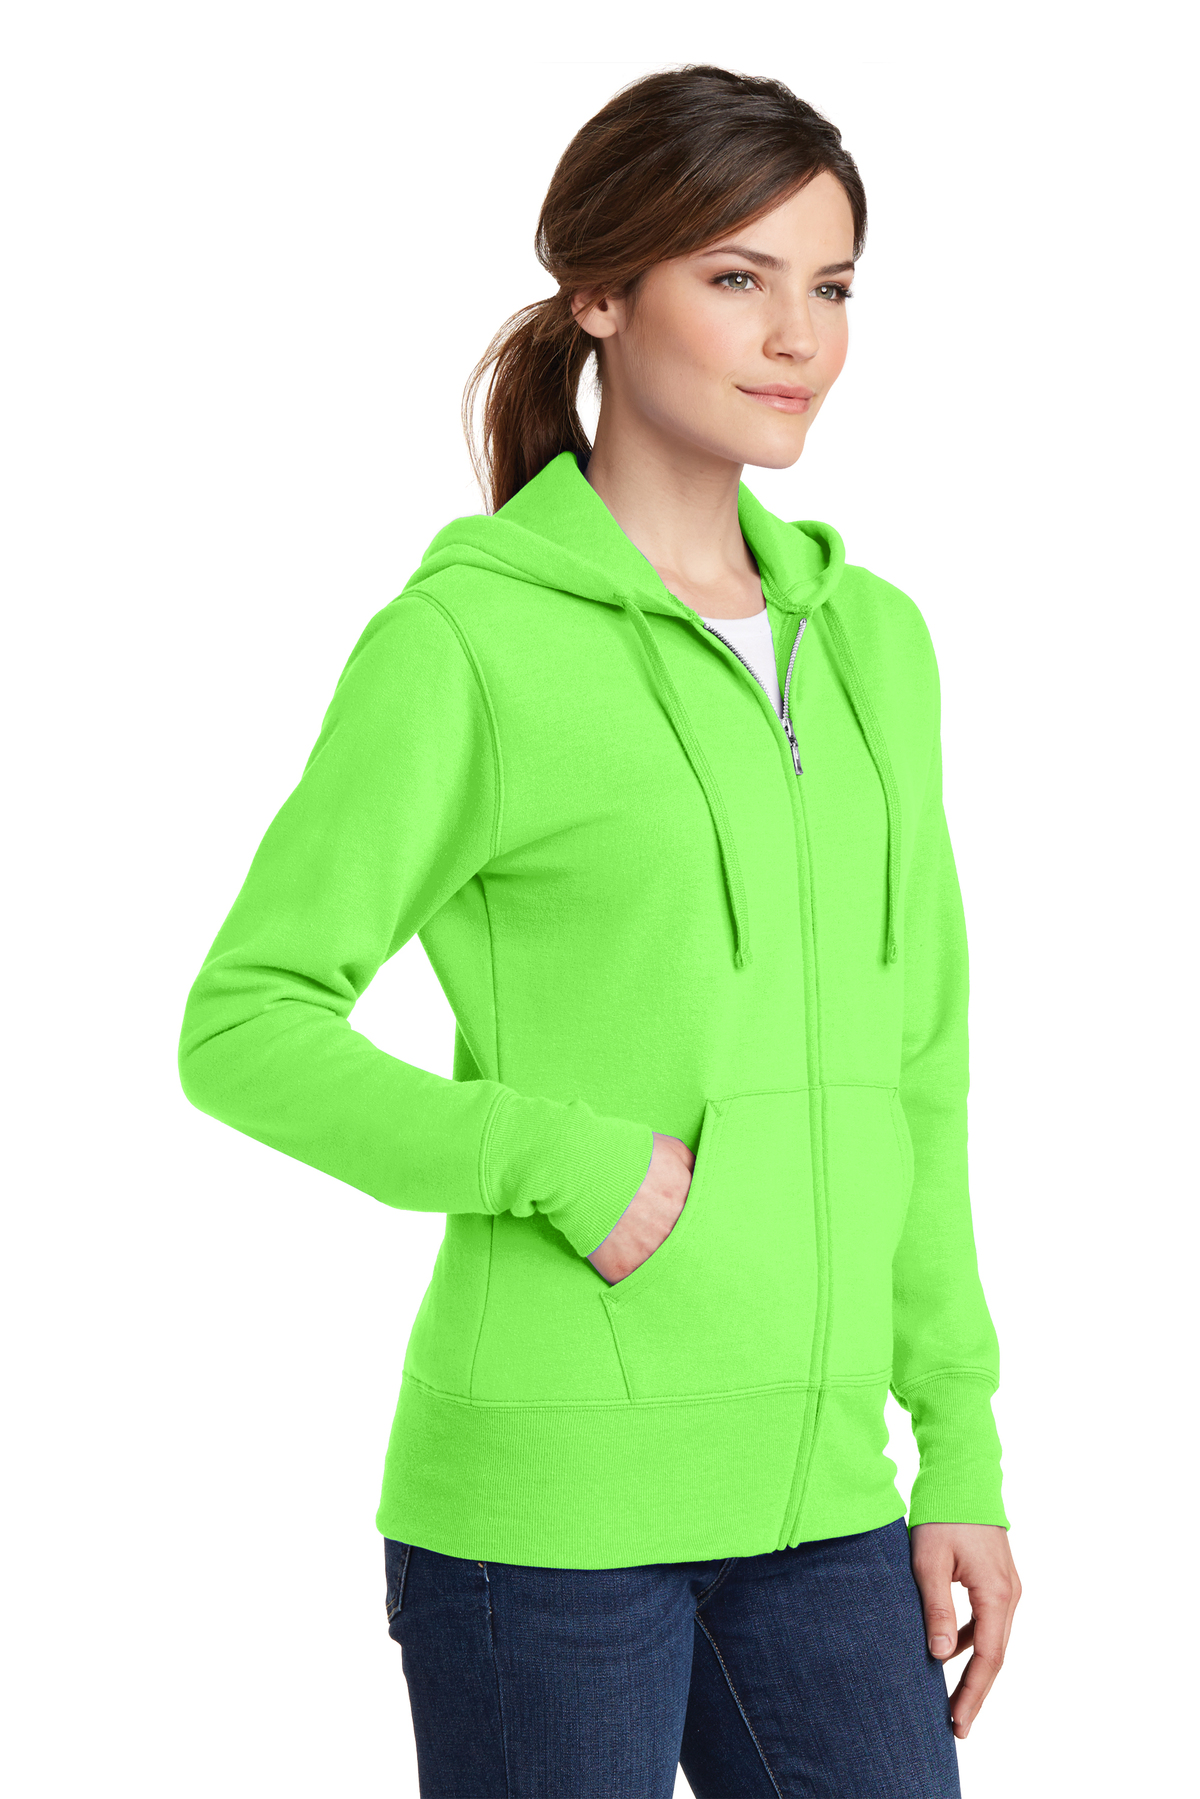 XS-4XL Ladies Core Fleece Full-Zip Hooded Sweatshirts in Sizes